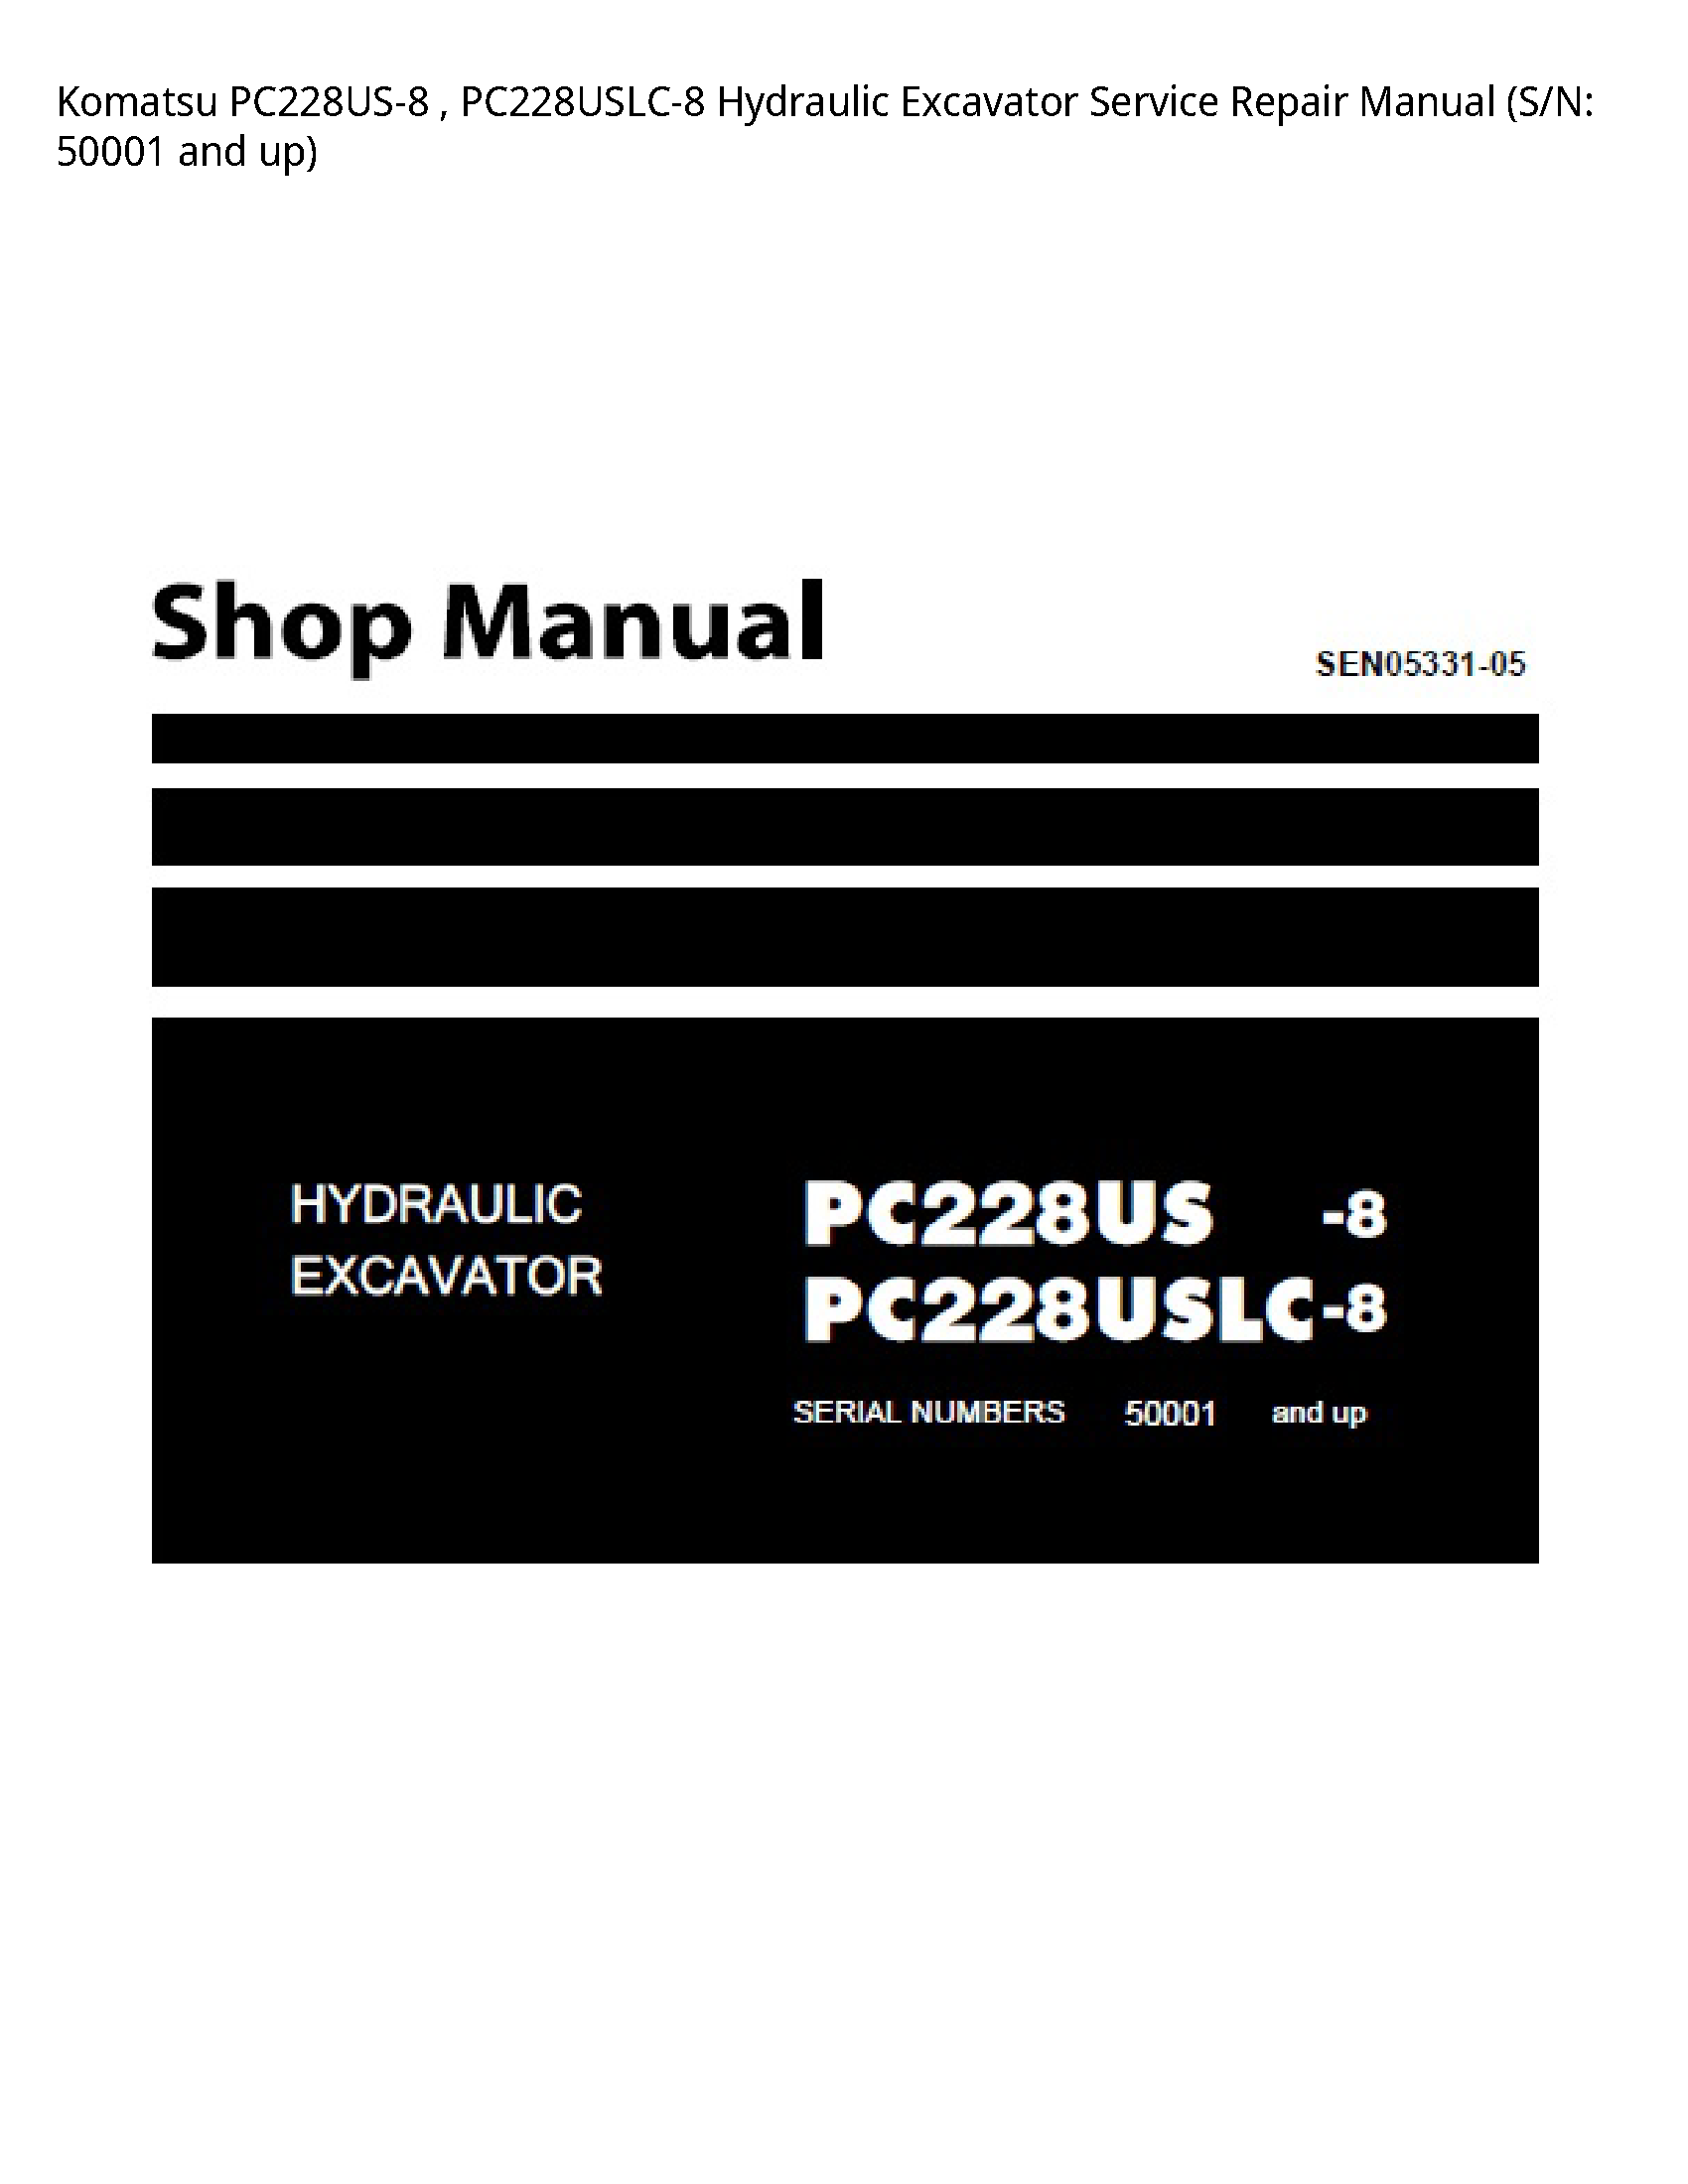 KOMATSU PC228US-8 Hydraulic Excavator manual